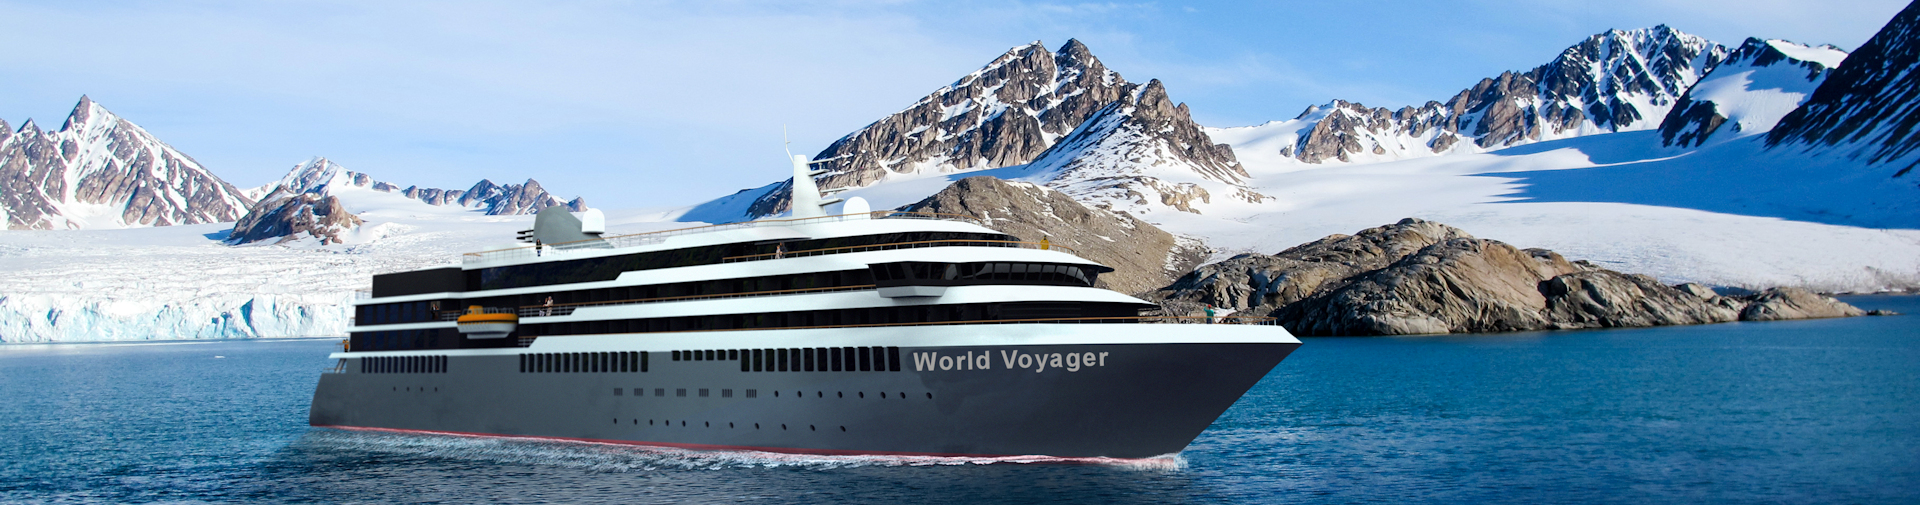 world voyager nicko cruises hochsee